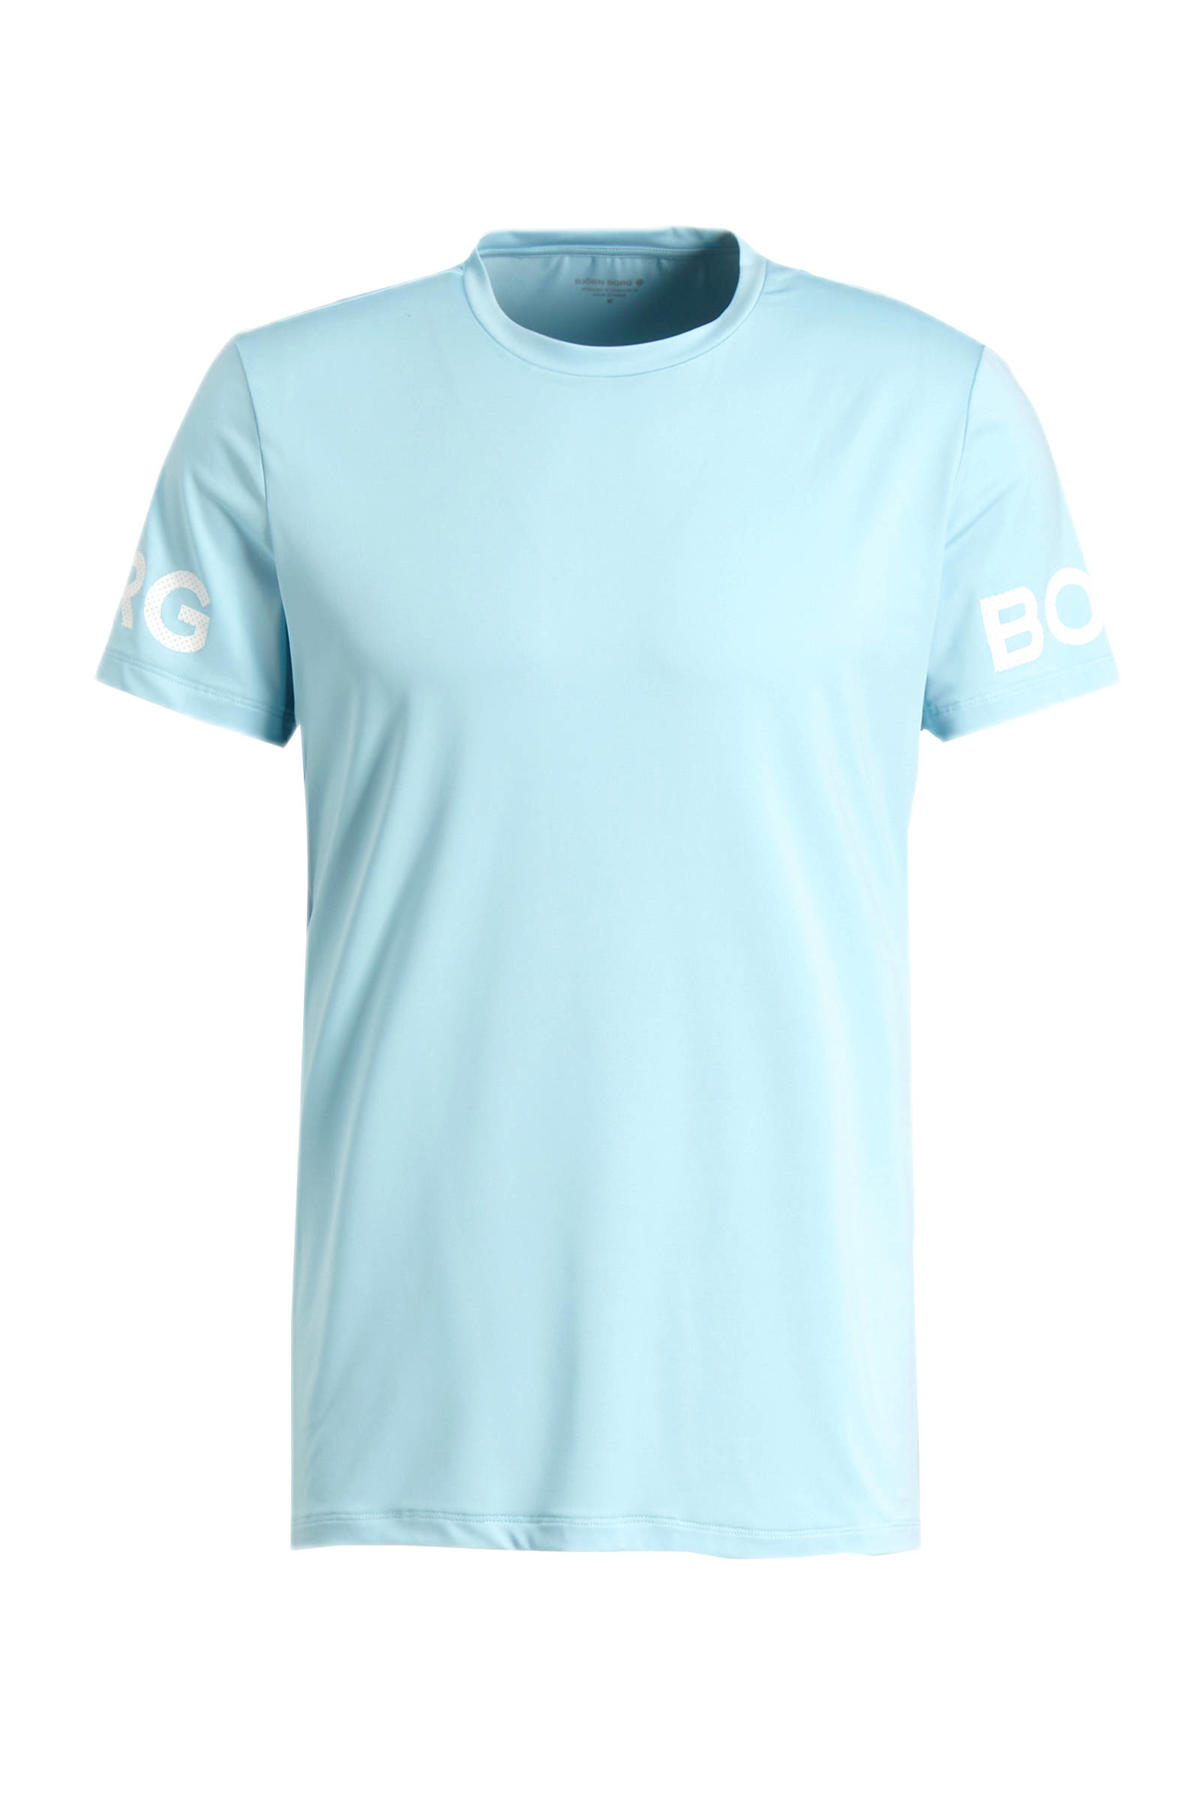 Björn Borg T-shirt lichtblauw | wehkamp